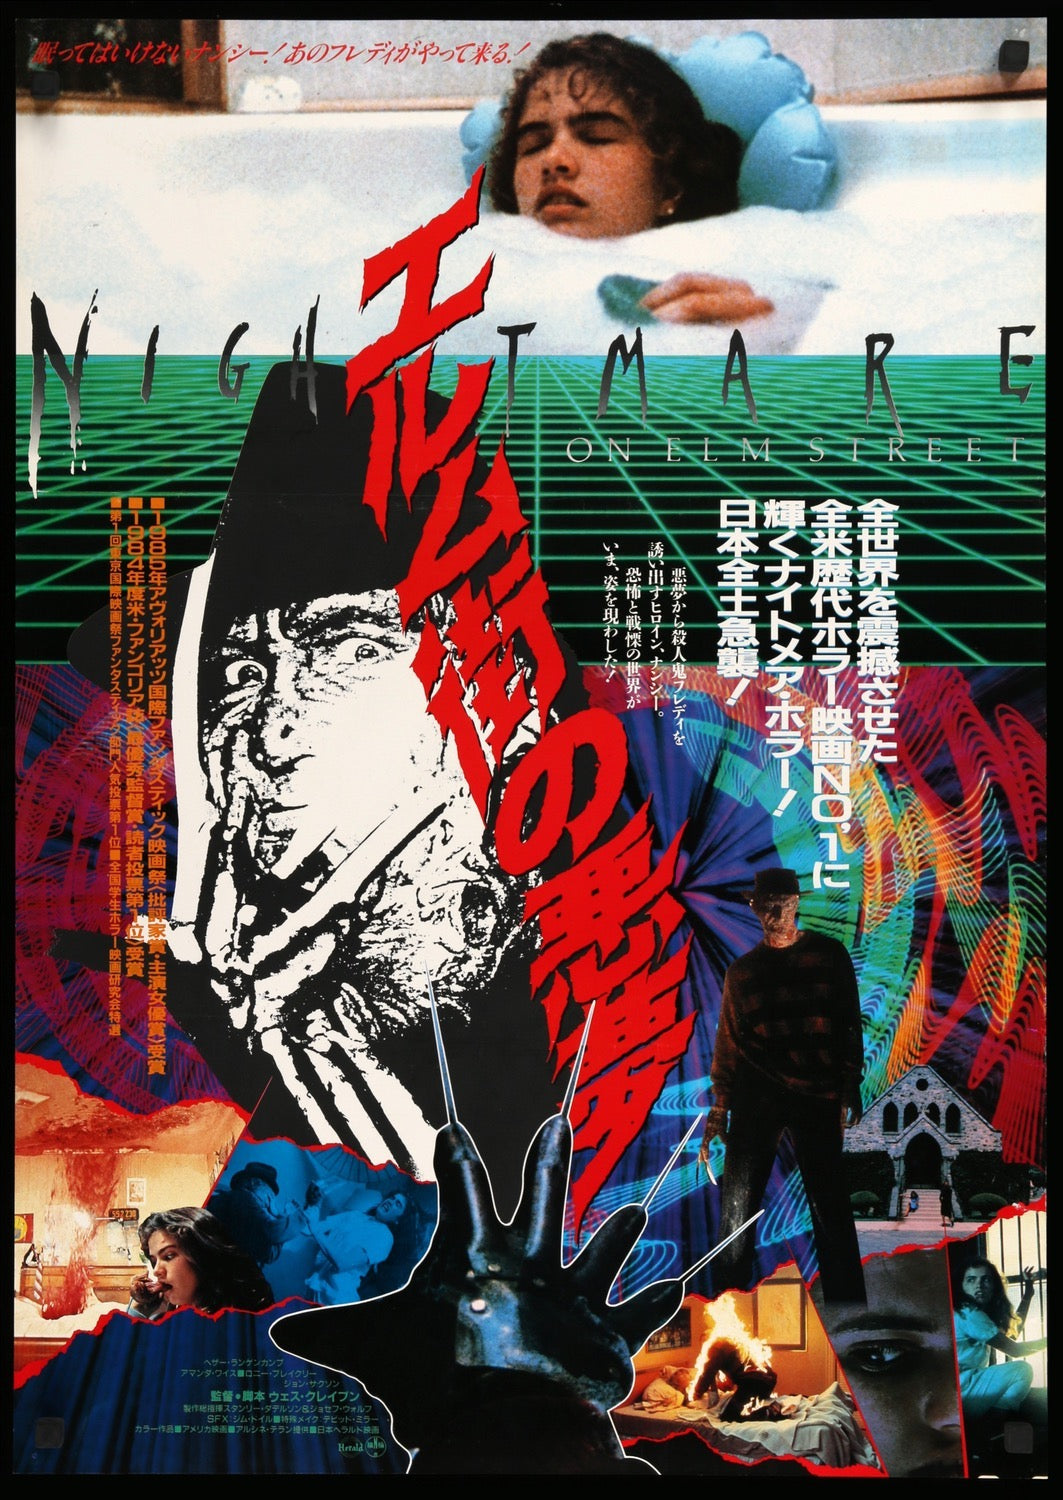 Nightmare on Elm Street (1984) original movie poster for sale at Original Film Art